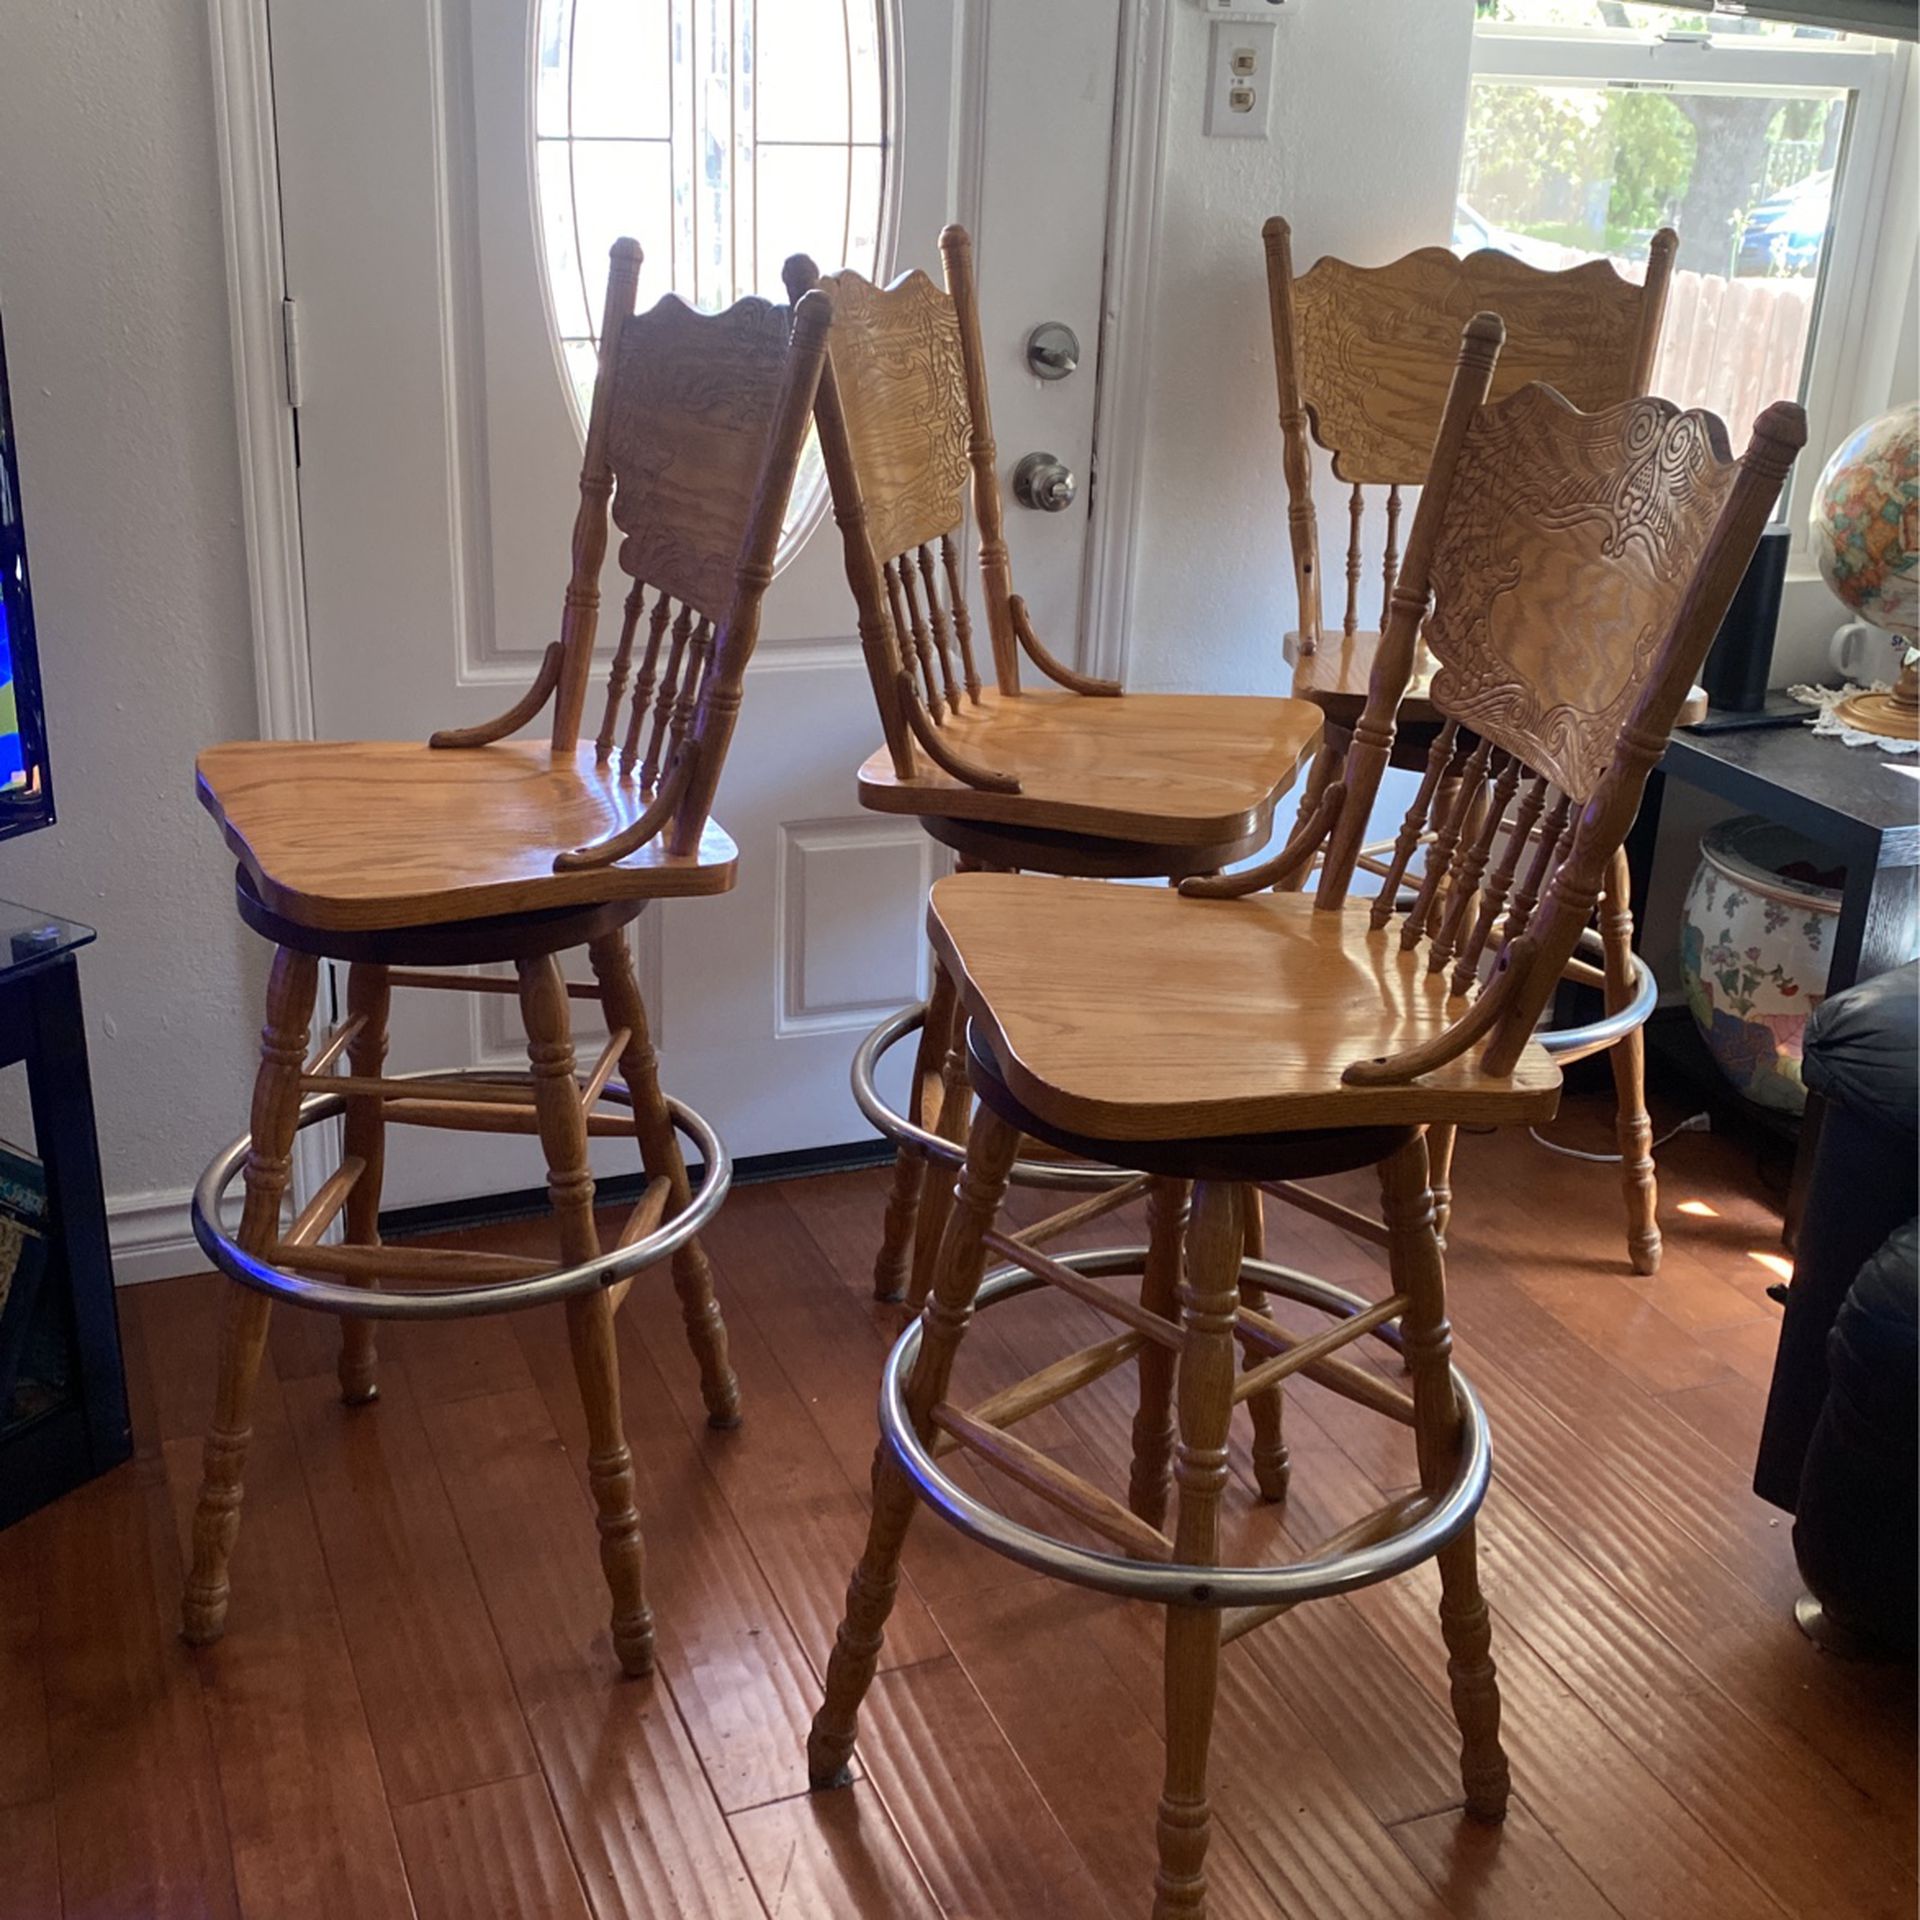 4 Swirl Wooden Bar Stool Chairs $200 OBO